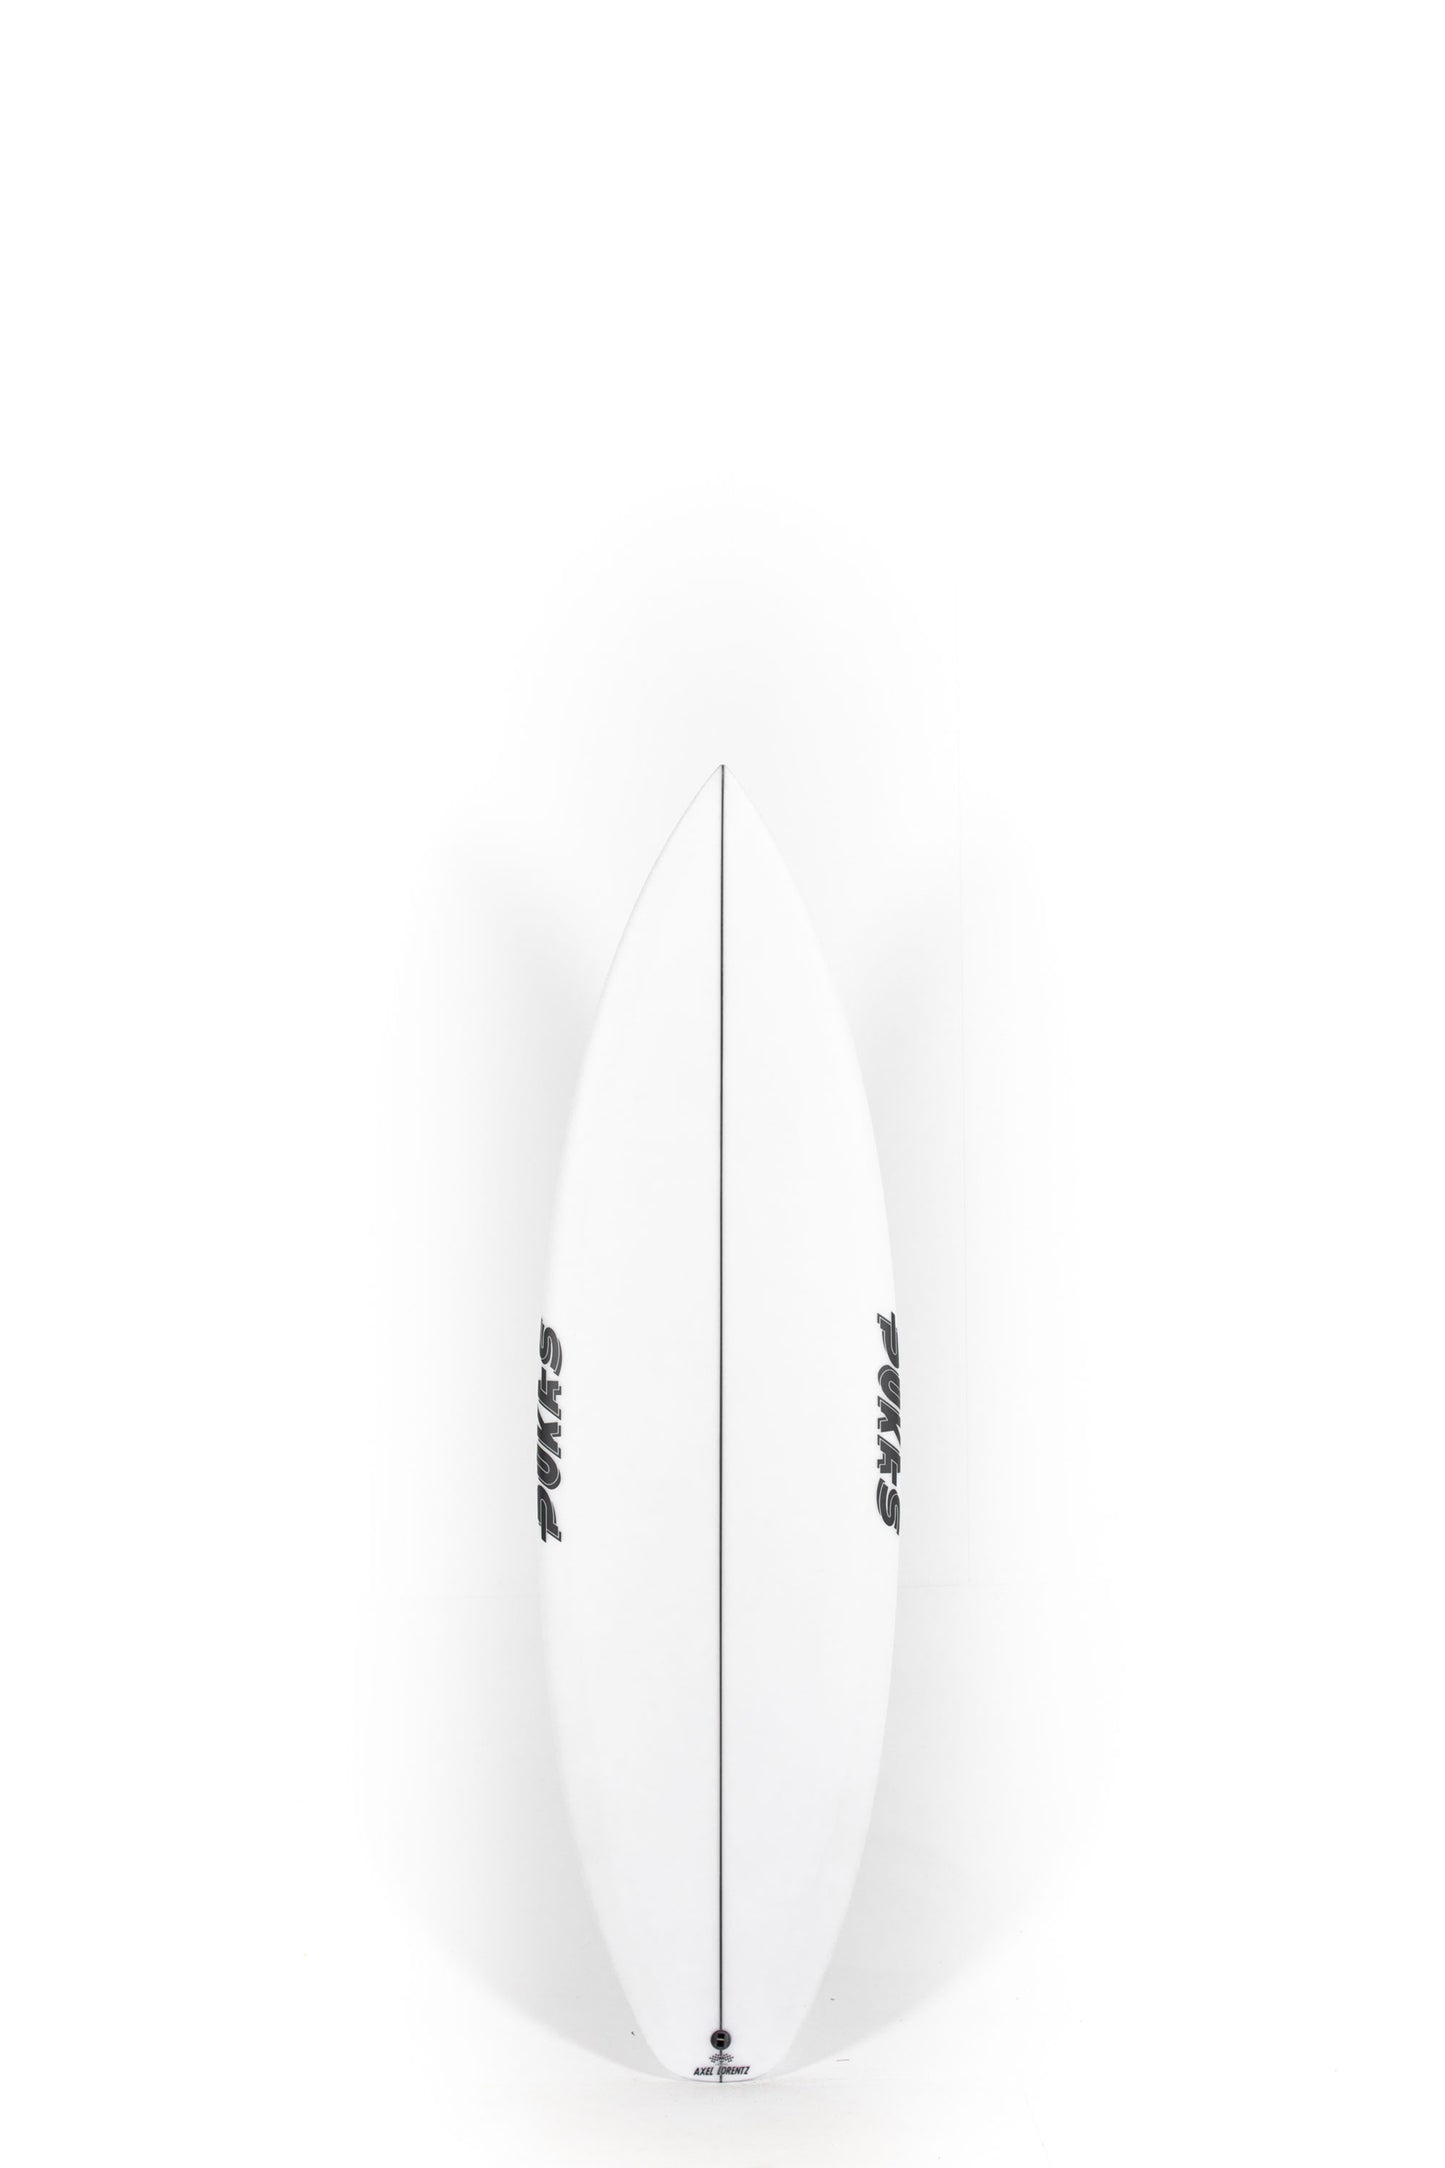 Pukas Surf Shop - Pukas Surfboard - DARKER by Axel Lorentz - 5'8" x 19 x 2,25 x 25,9L. - AX08146